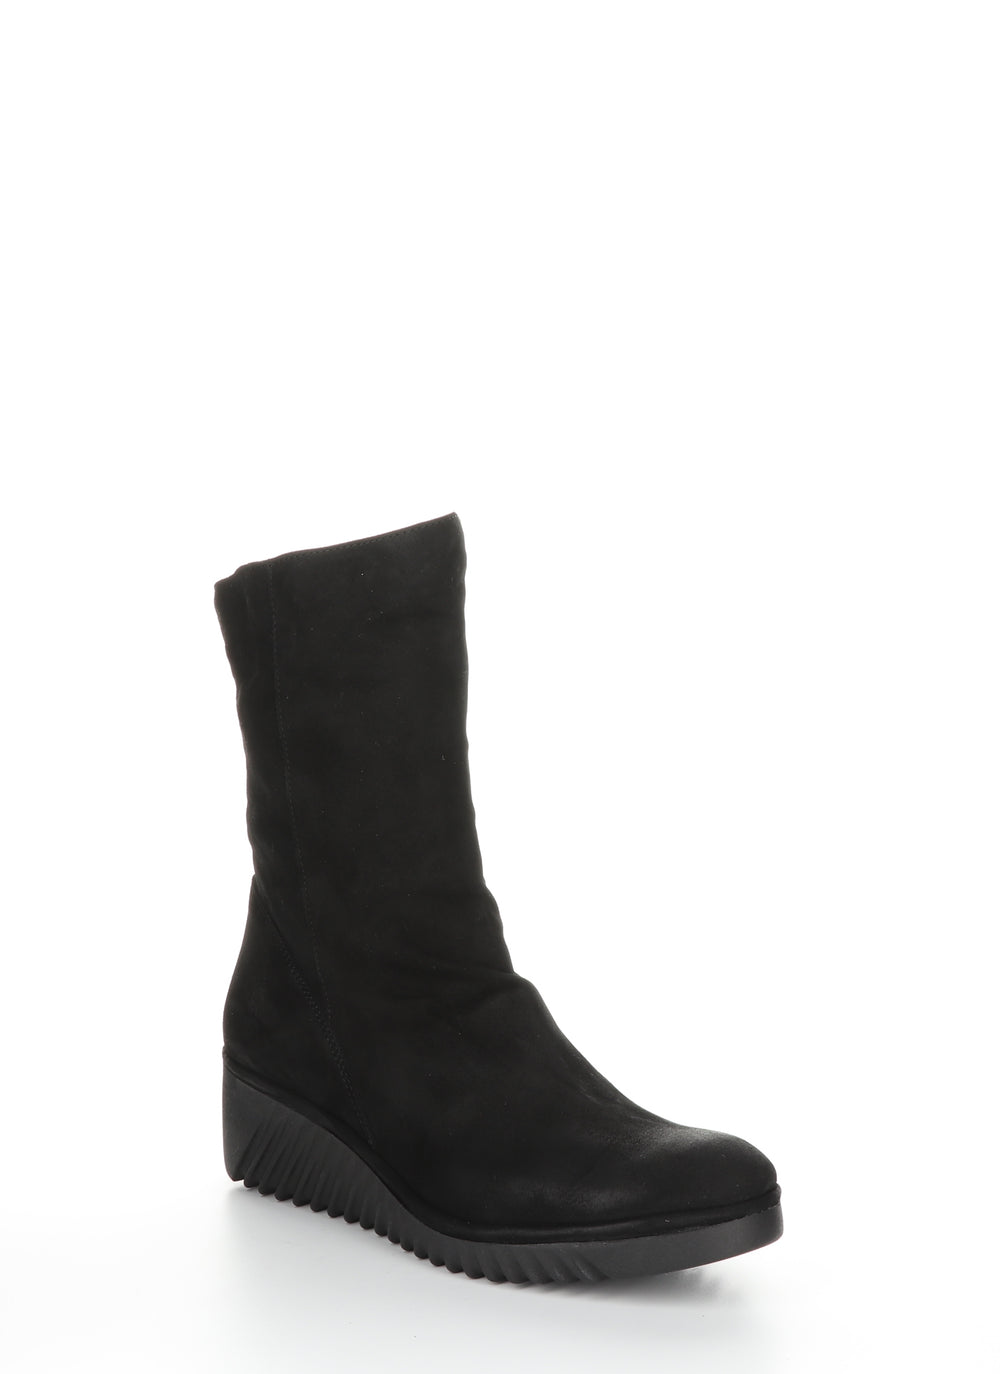 LEDE228FLY Black Zip Up Boots|LEDE228FLY Bottes avec Fermeture Zippée in Noir